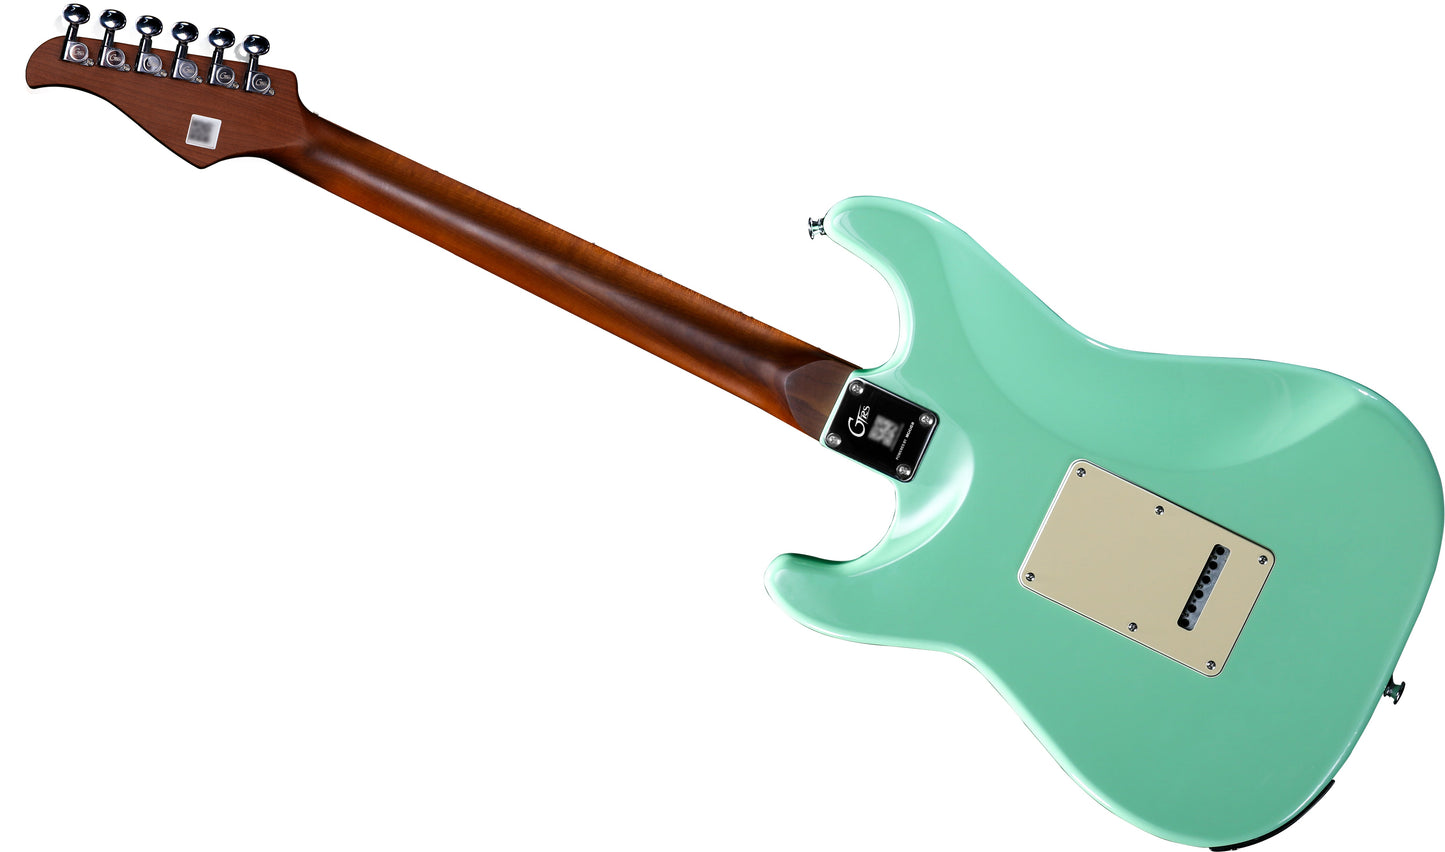 Mooer GTRS S800 Intelligent Guitar (Surf Green)